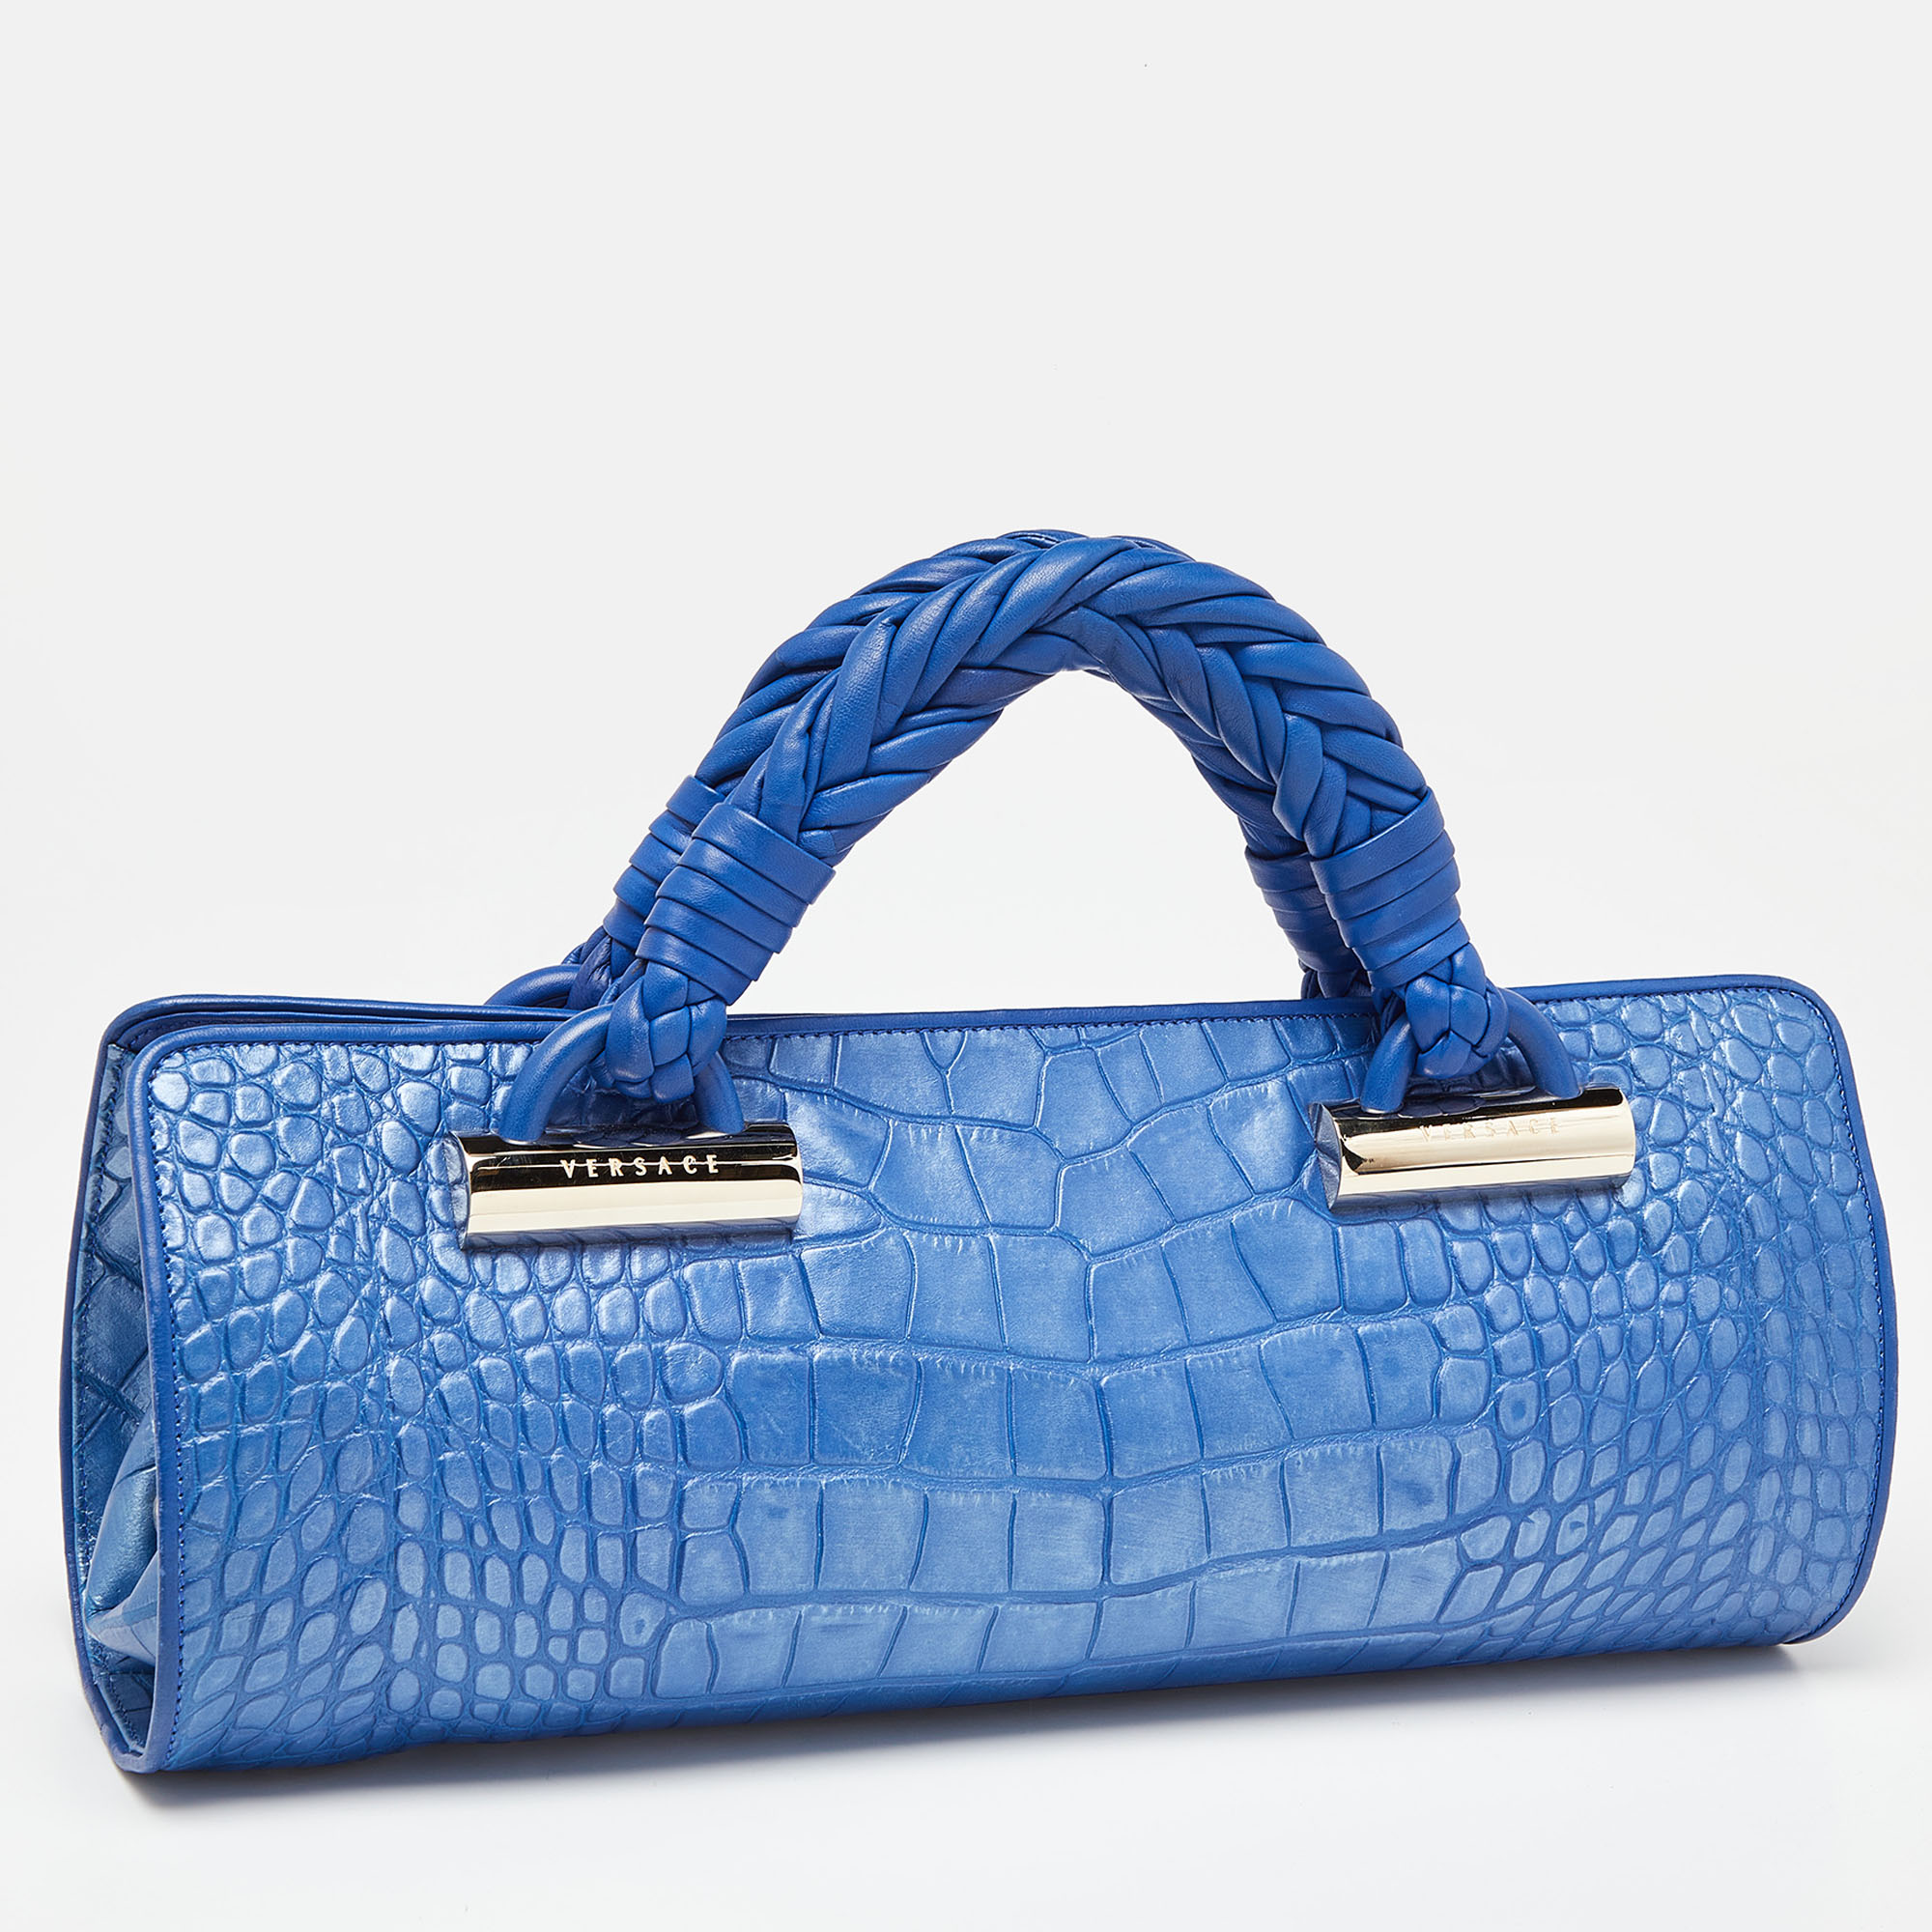 Versace Metallic Blue Croc Embossed Leather Frame Satchel